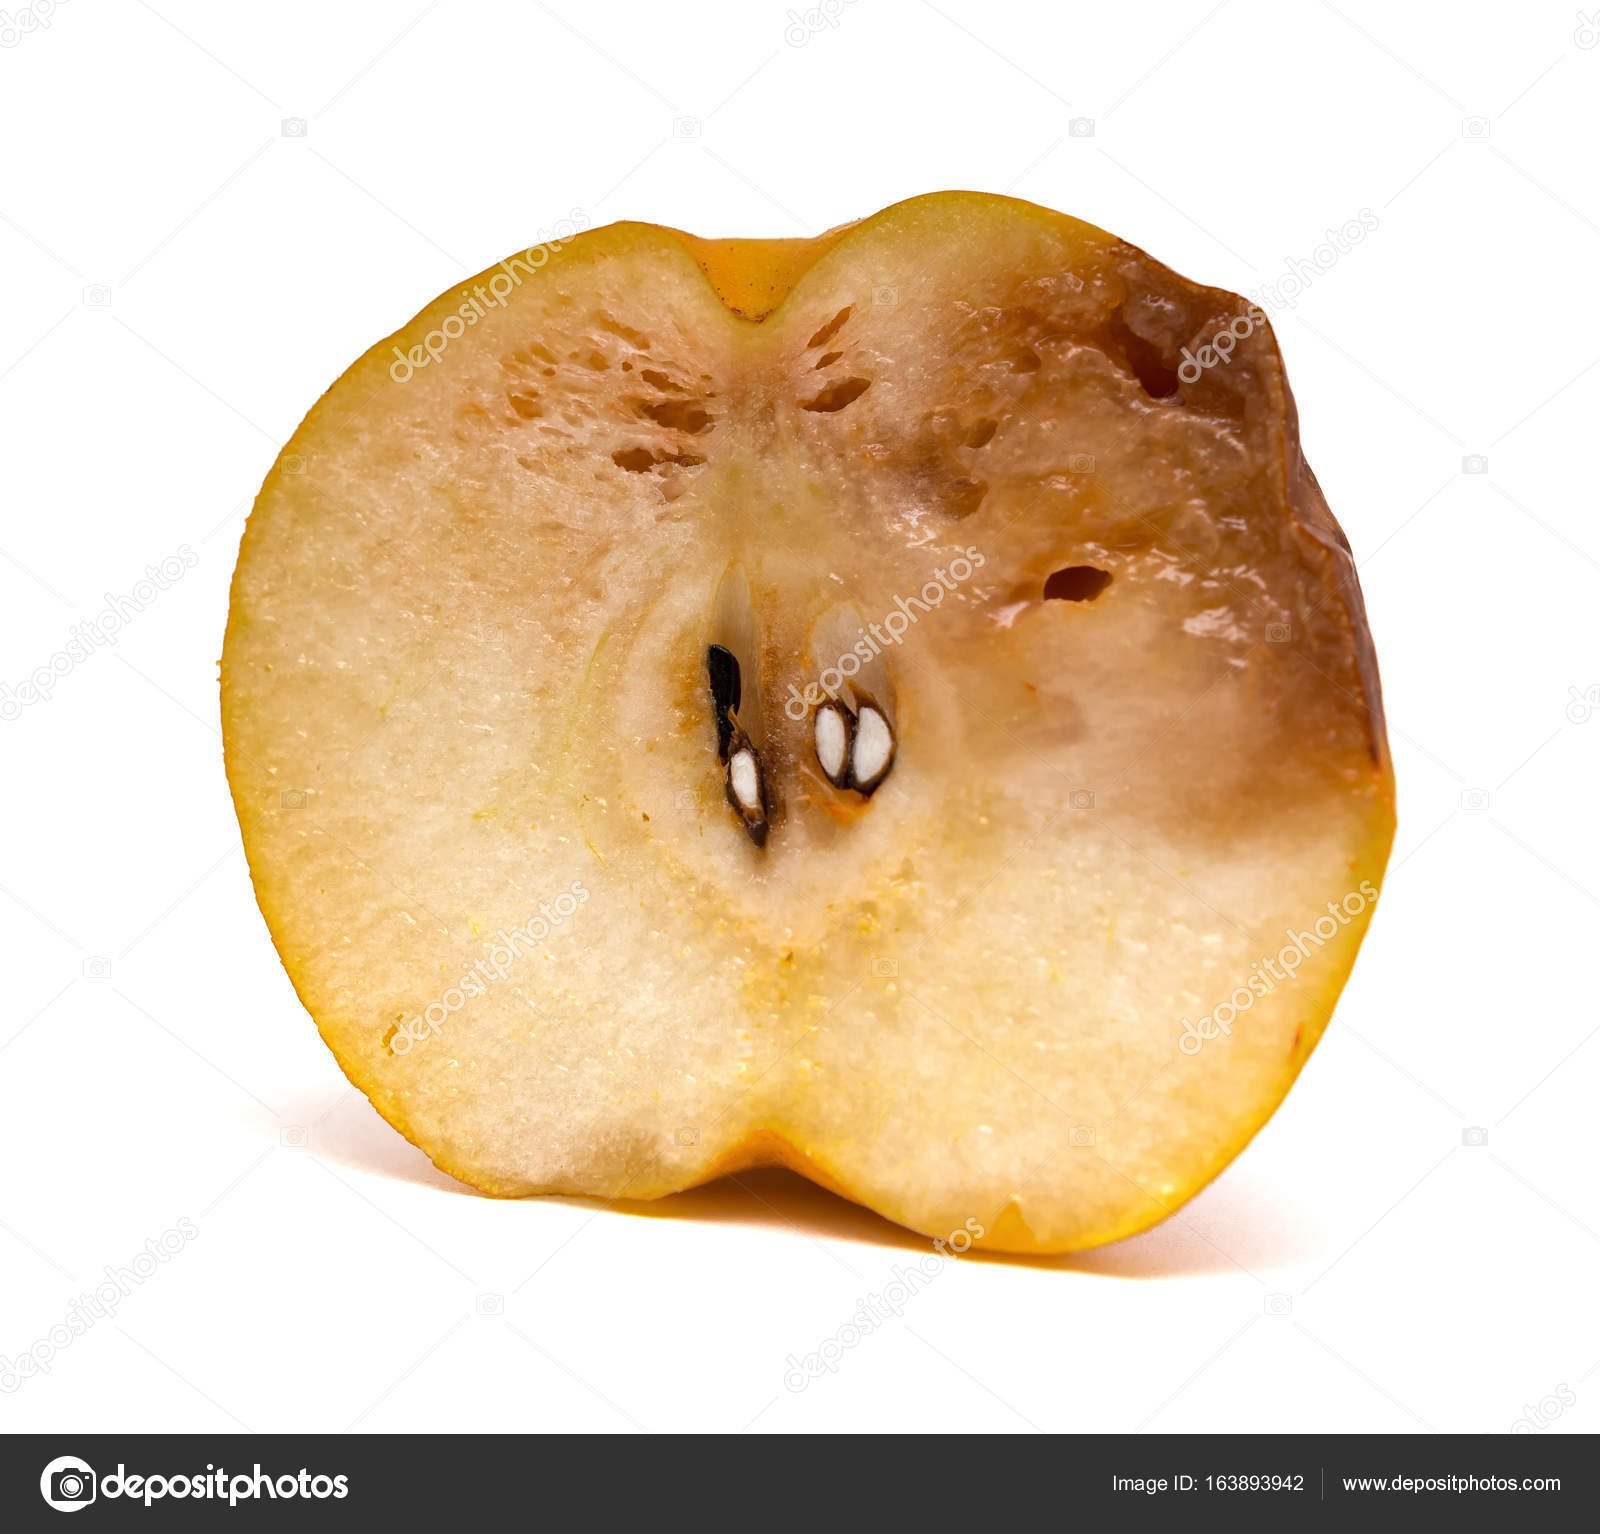 Rotten pear photo